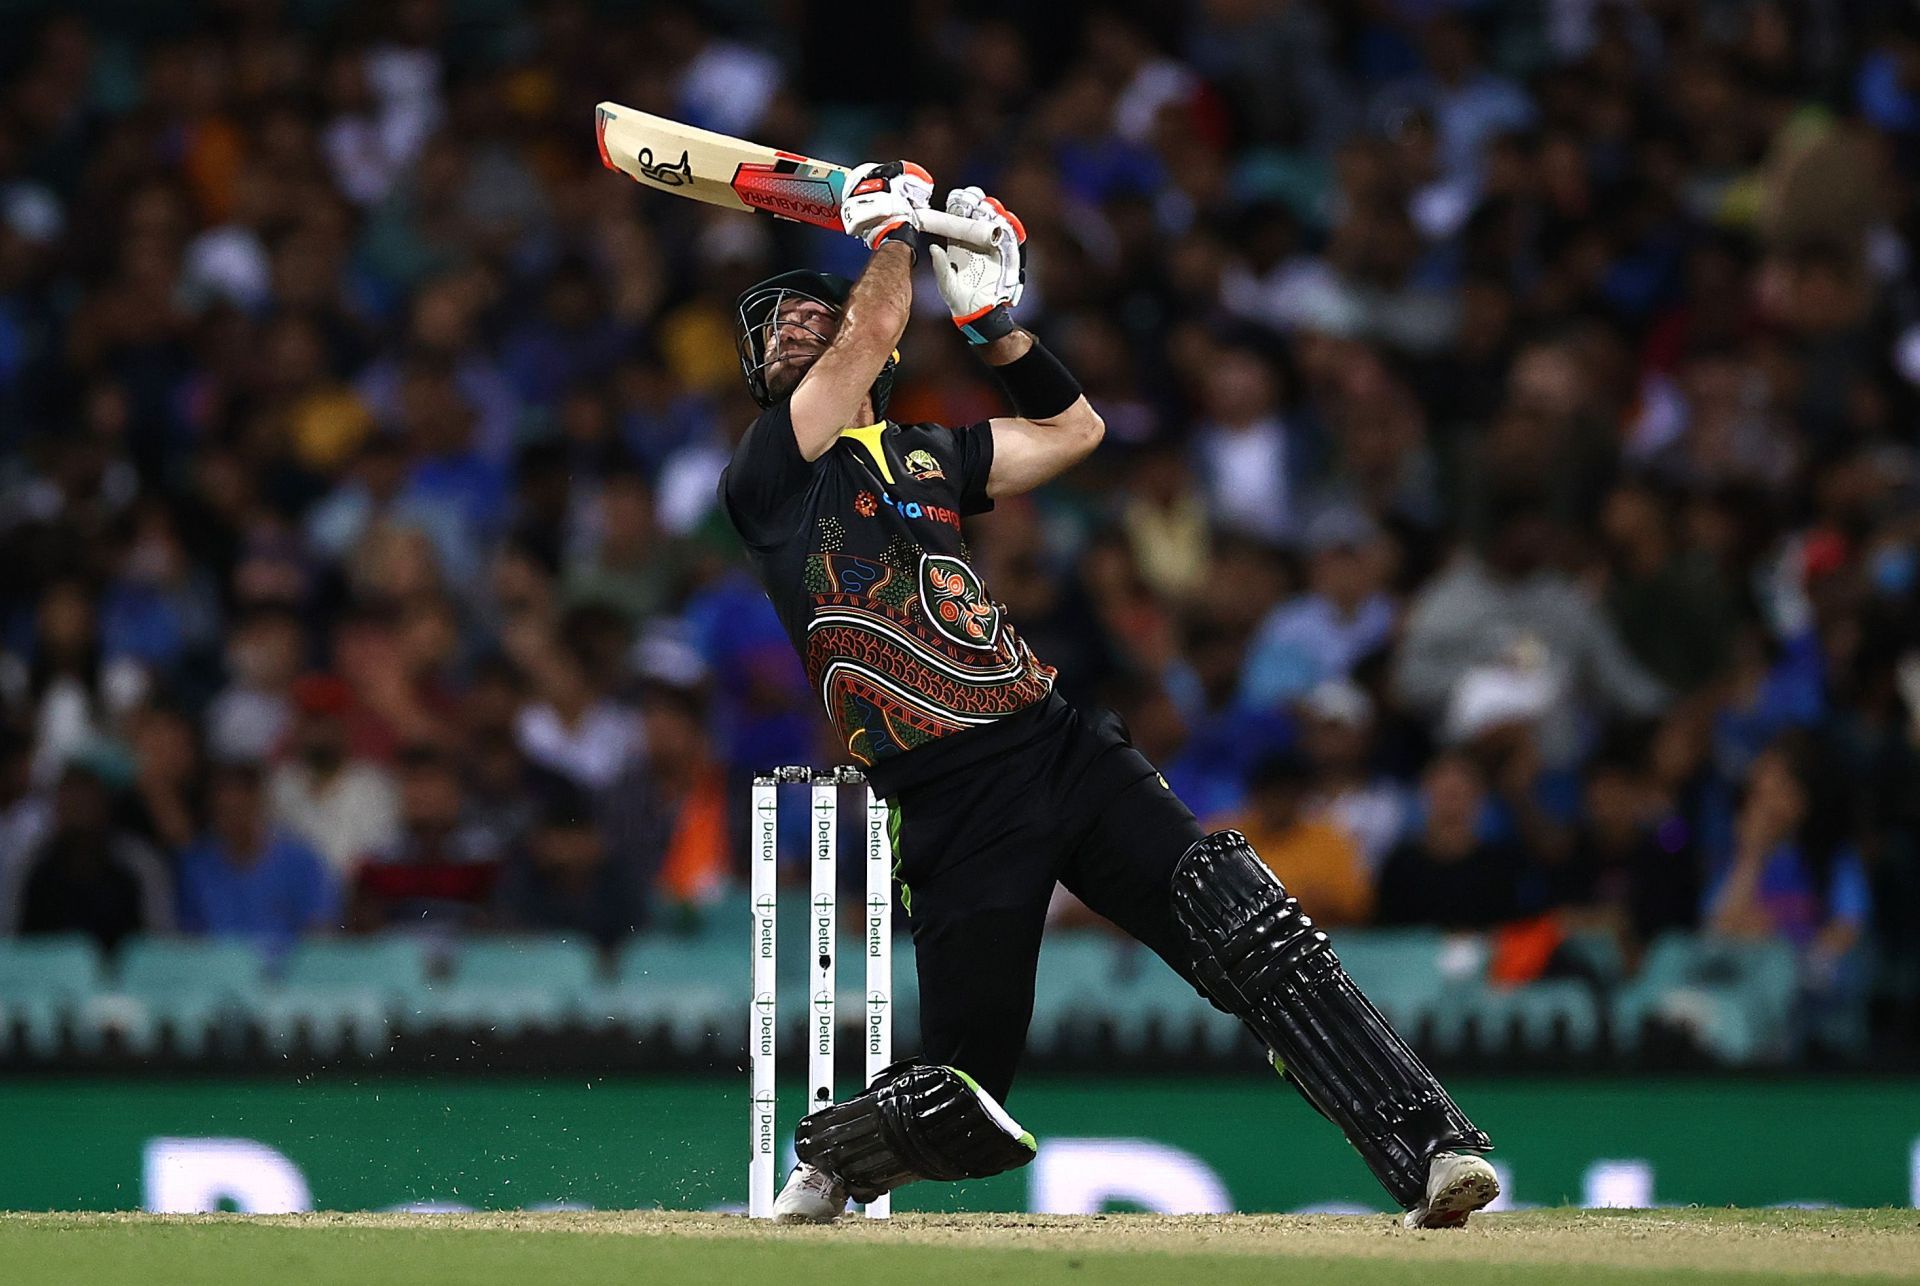 Glenn Maxwell enjoys batting against India. Pic: Getty Images